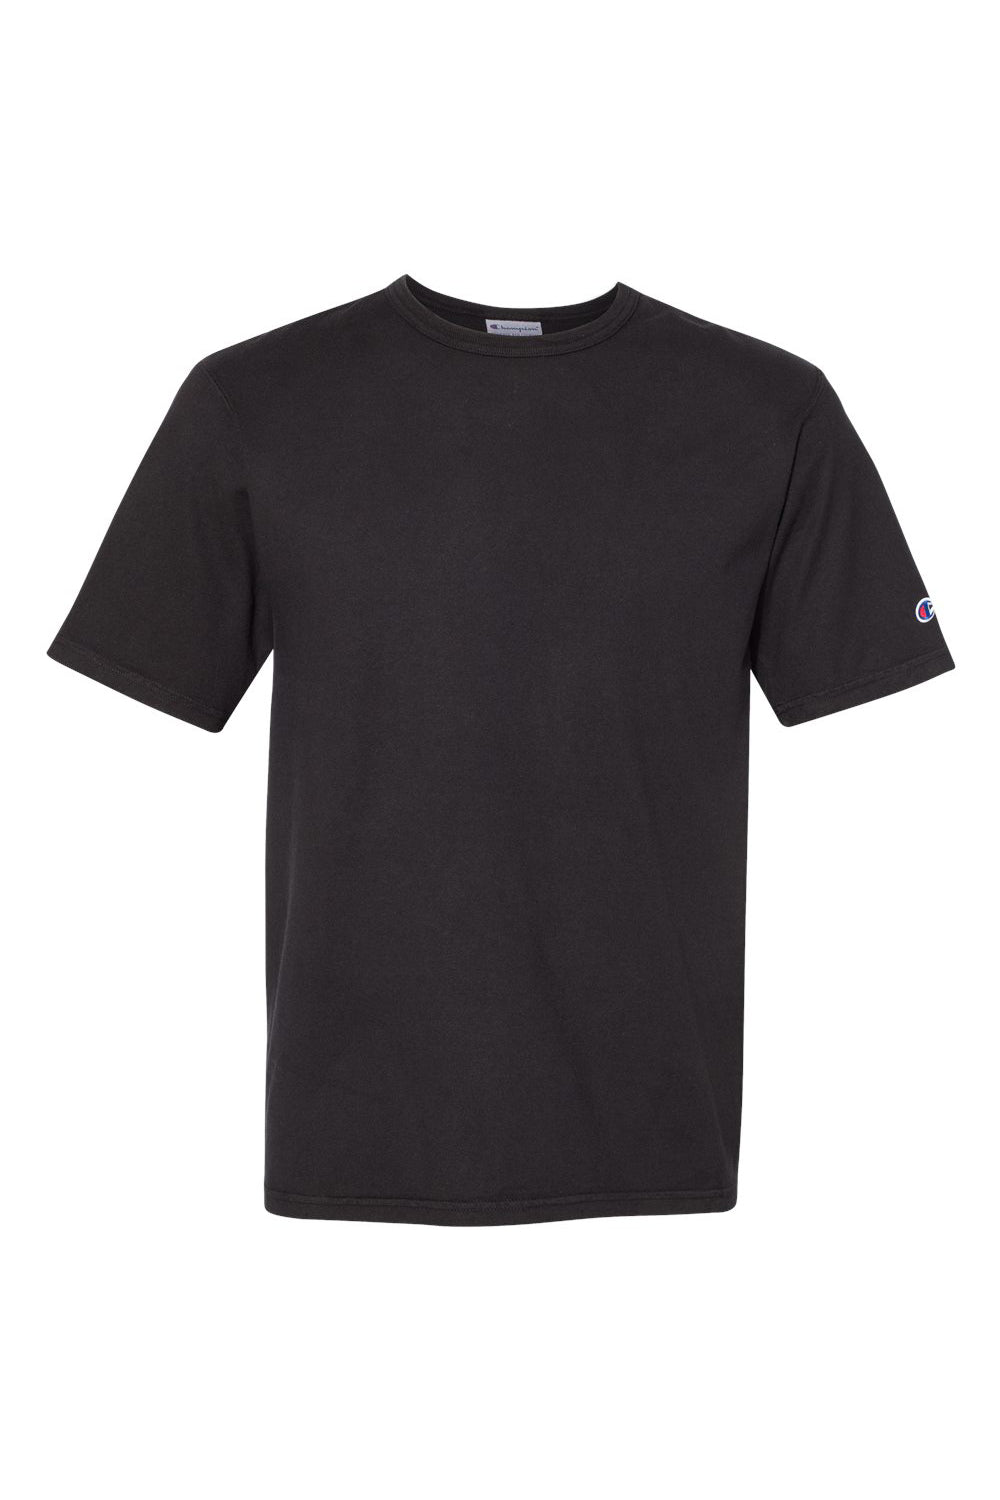 Champion CD100 Mens Garment Dyed Short Sleeve Crewneck T-Shirt Black Flat Front